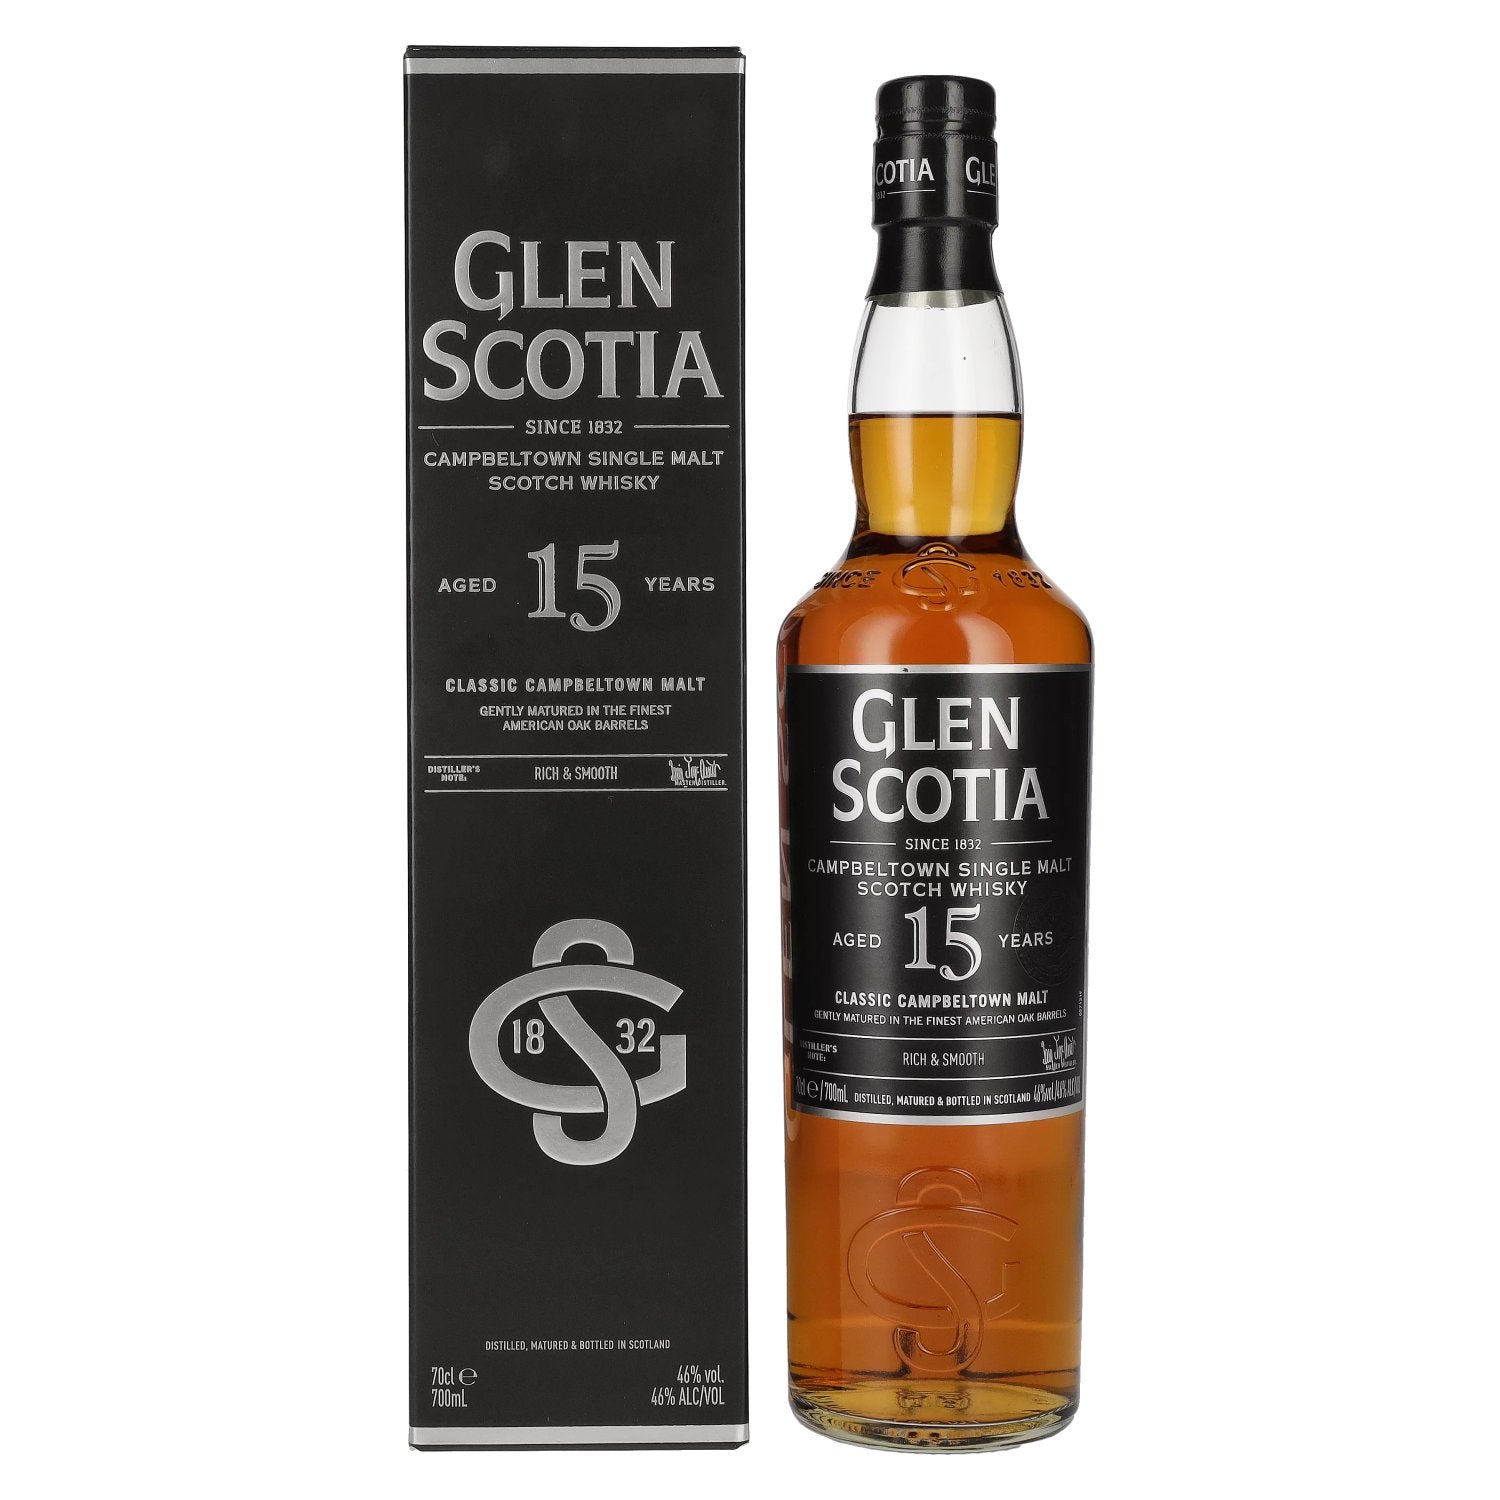 Glen Scotia 15 Years Old Single Malt Scotch Whisky 46% Vol. 0,7l in Giftbox